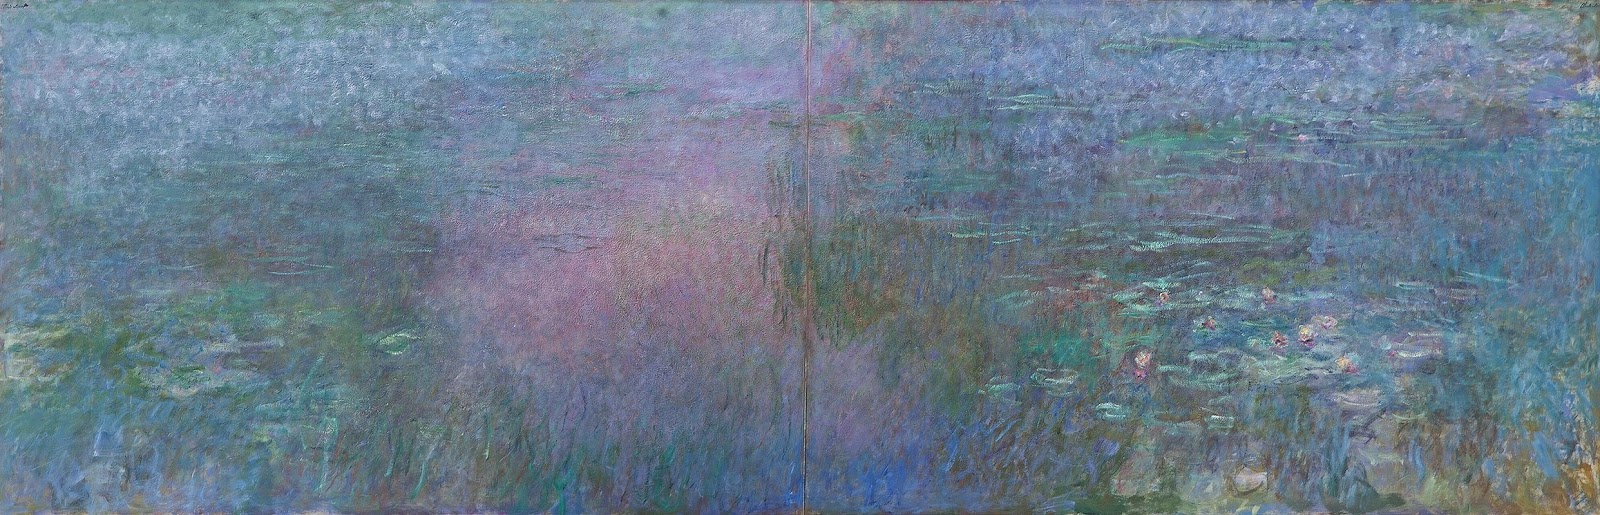 Claude+Monet-1840-1926 (419).jpg